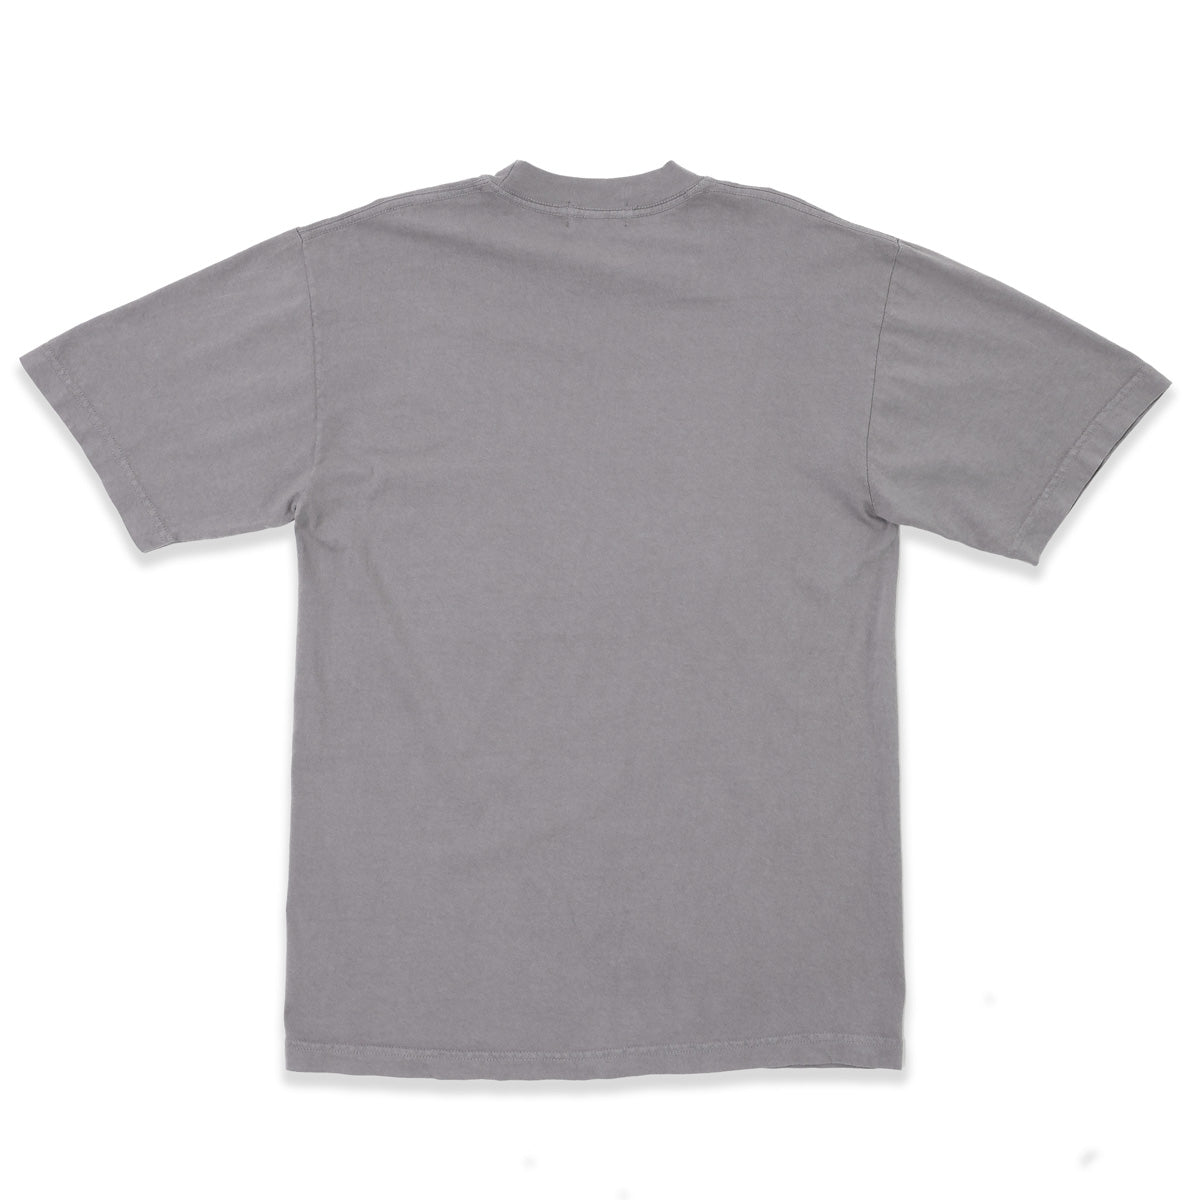 Marathon Ultra Leisure T-Shirt - Charcoal - Back